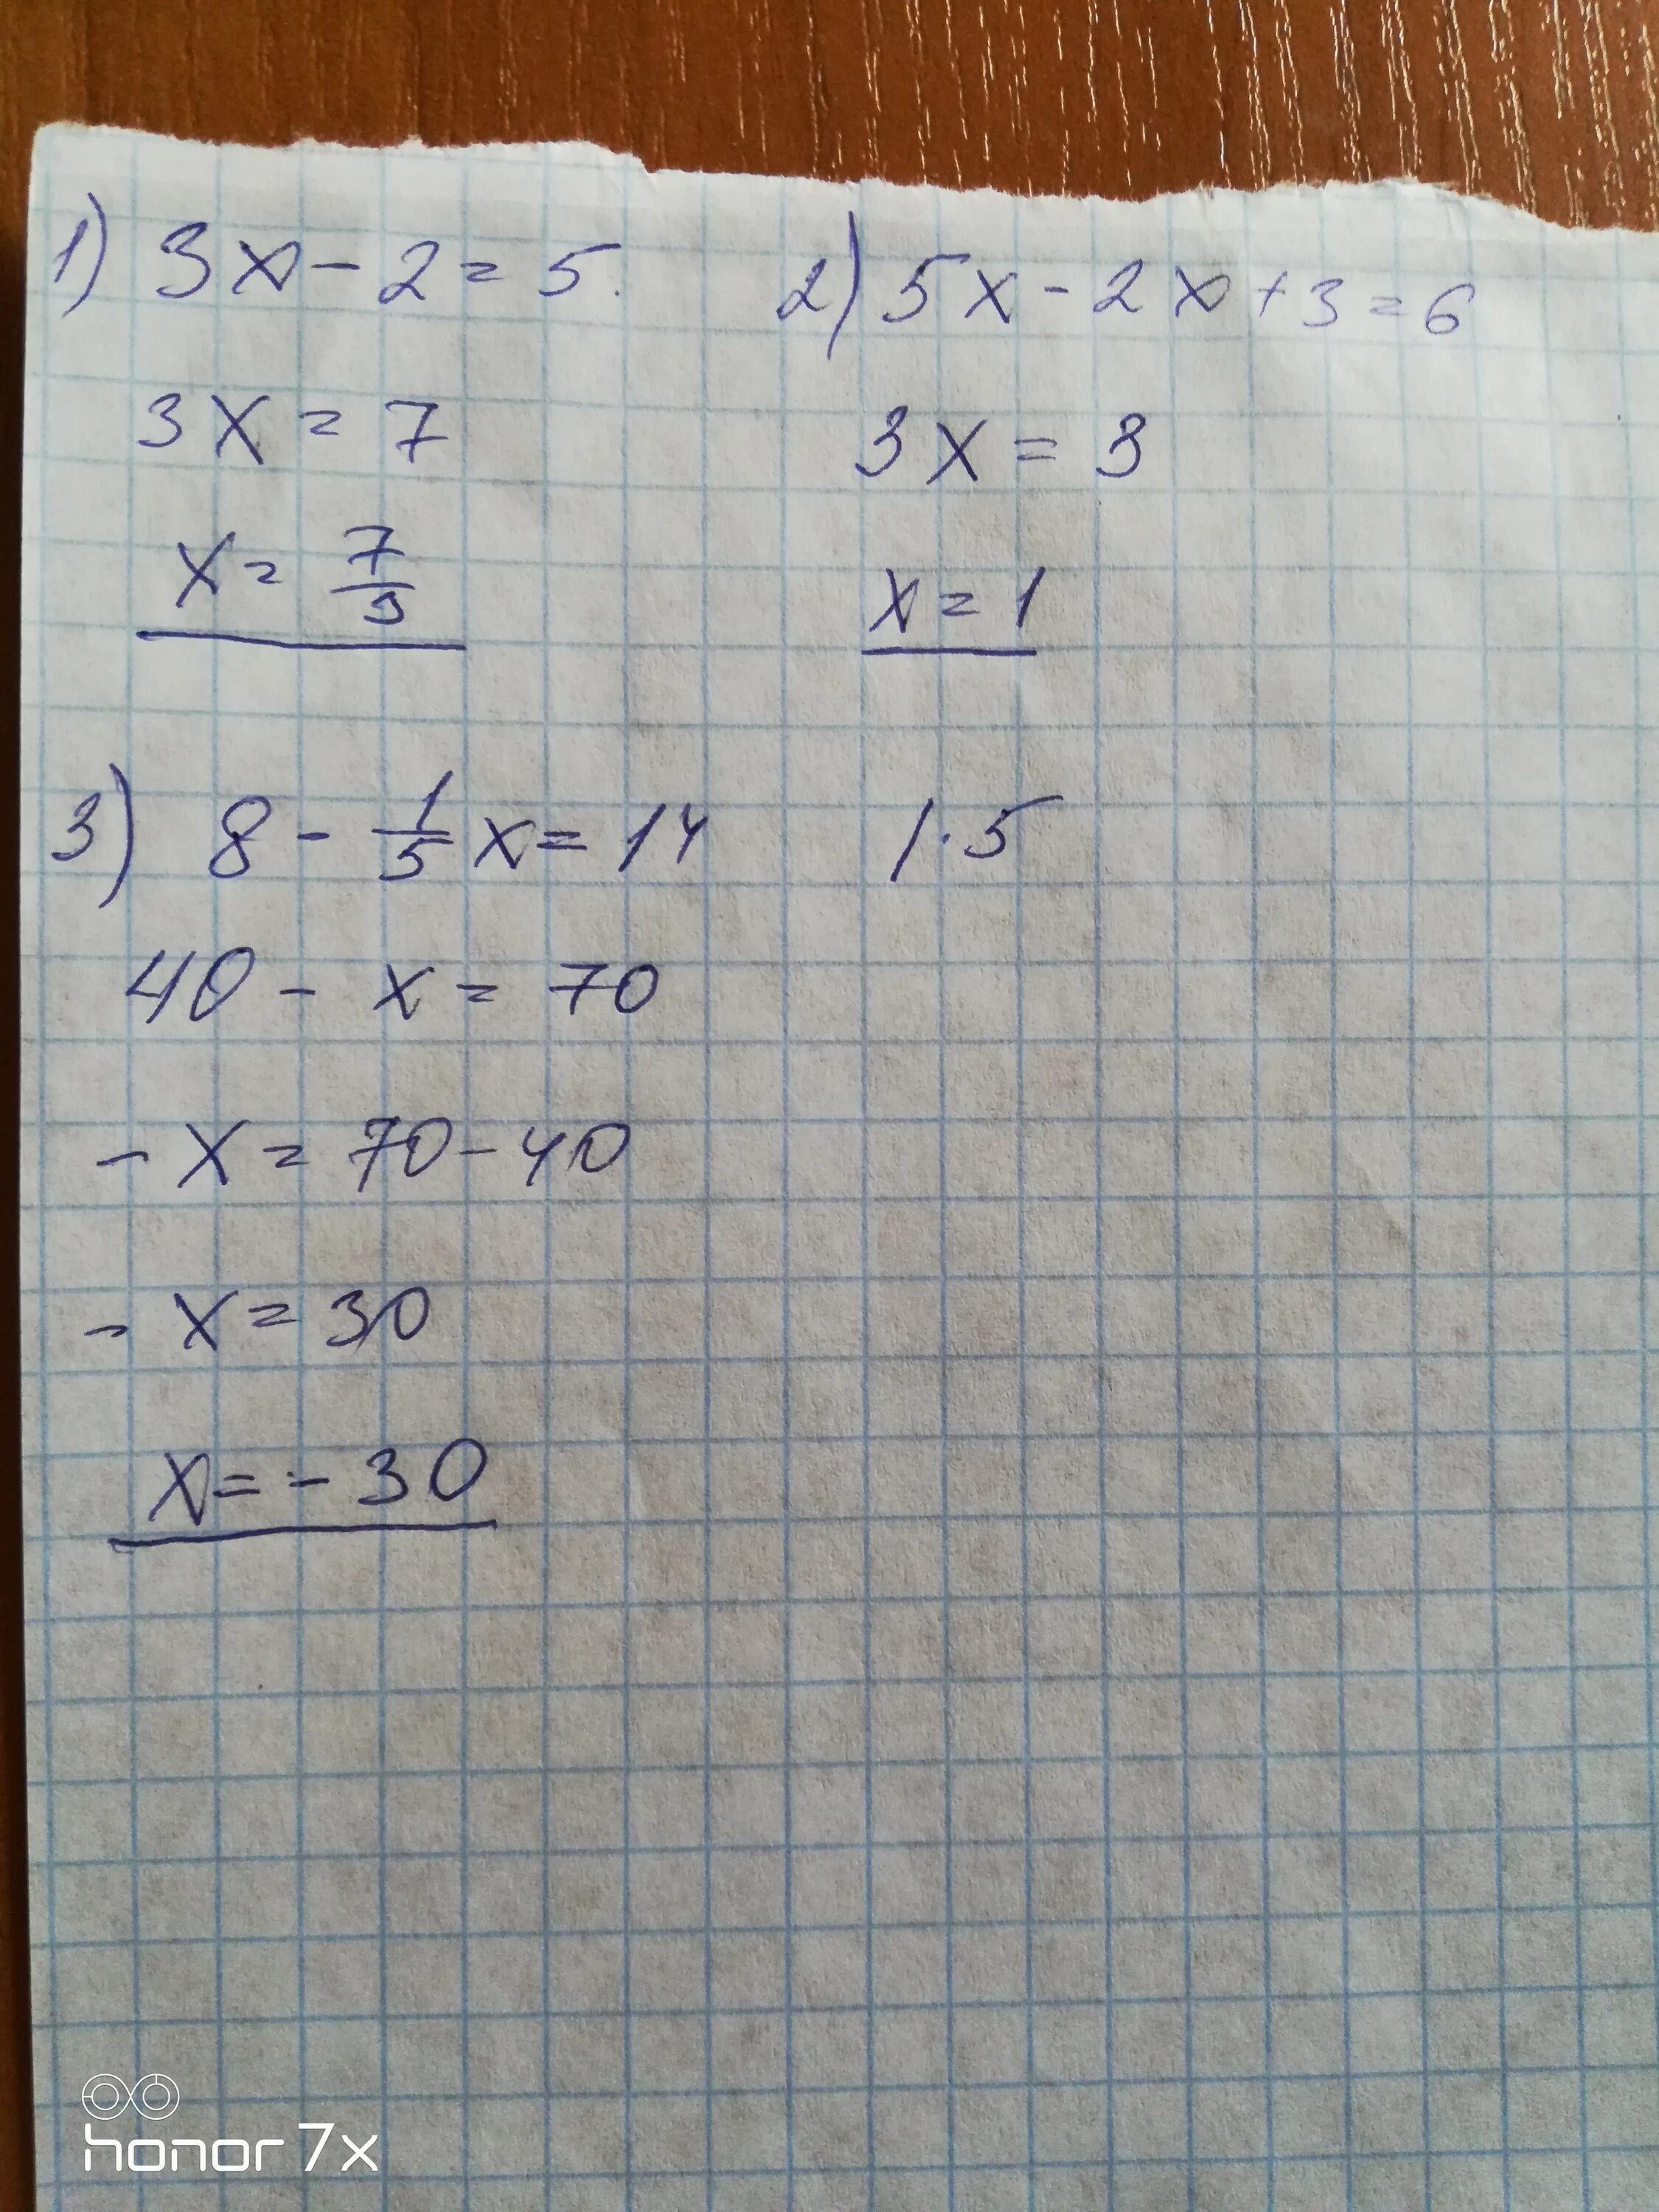 X 3 7x 14 5. X2-5x=14. (X-5)^2. 2x^8-3x^5 решение. 3x 2 2 6 5x.